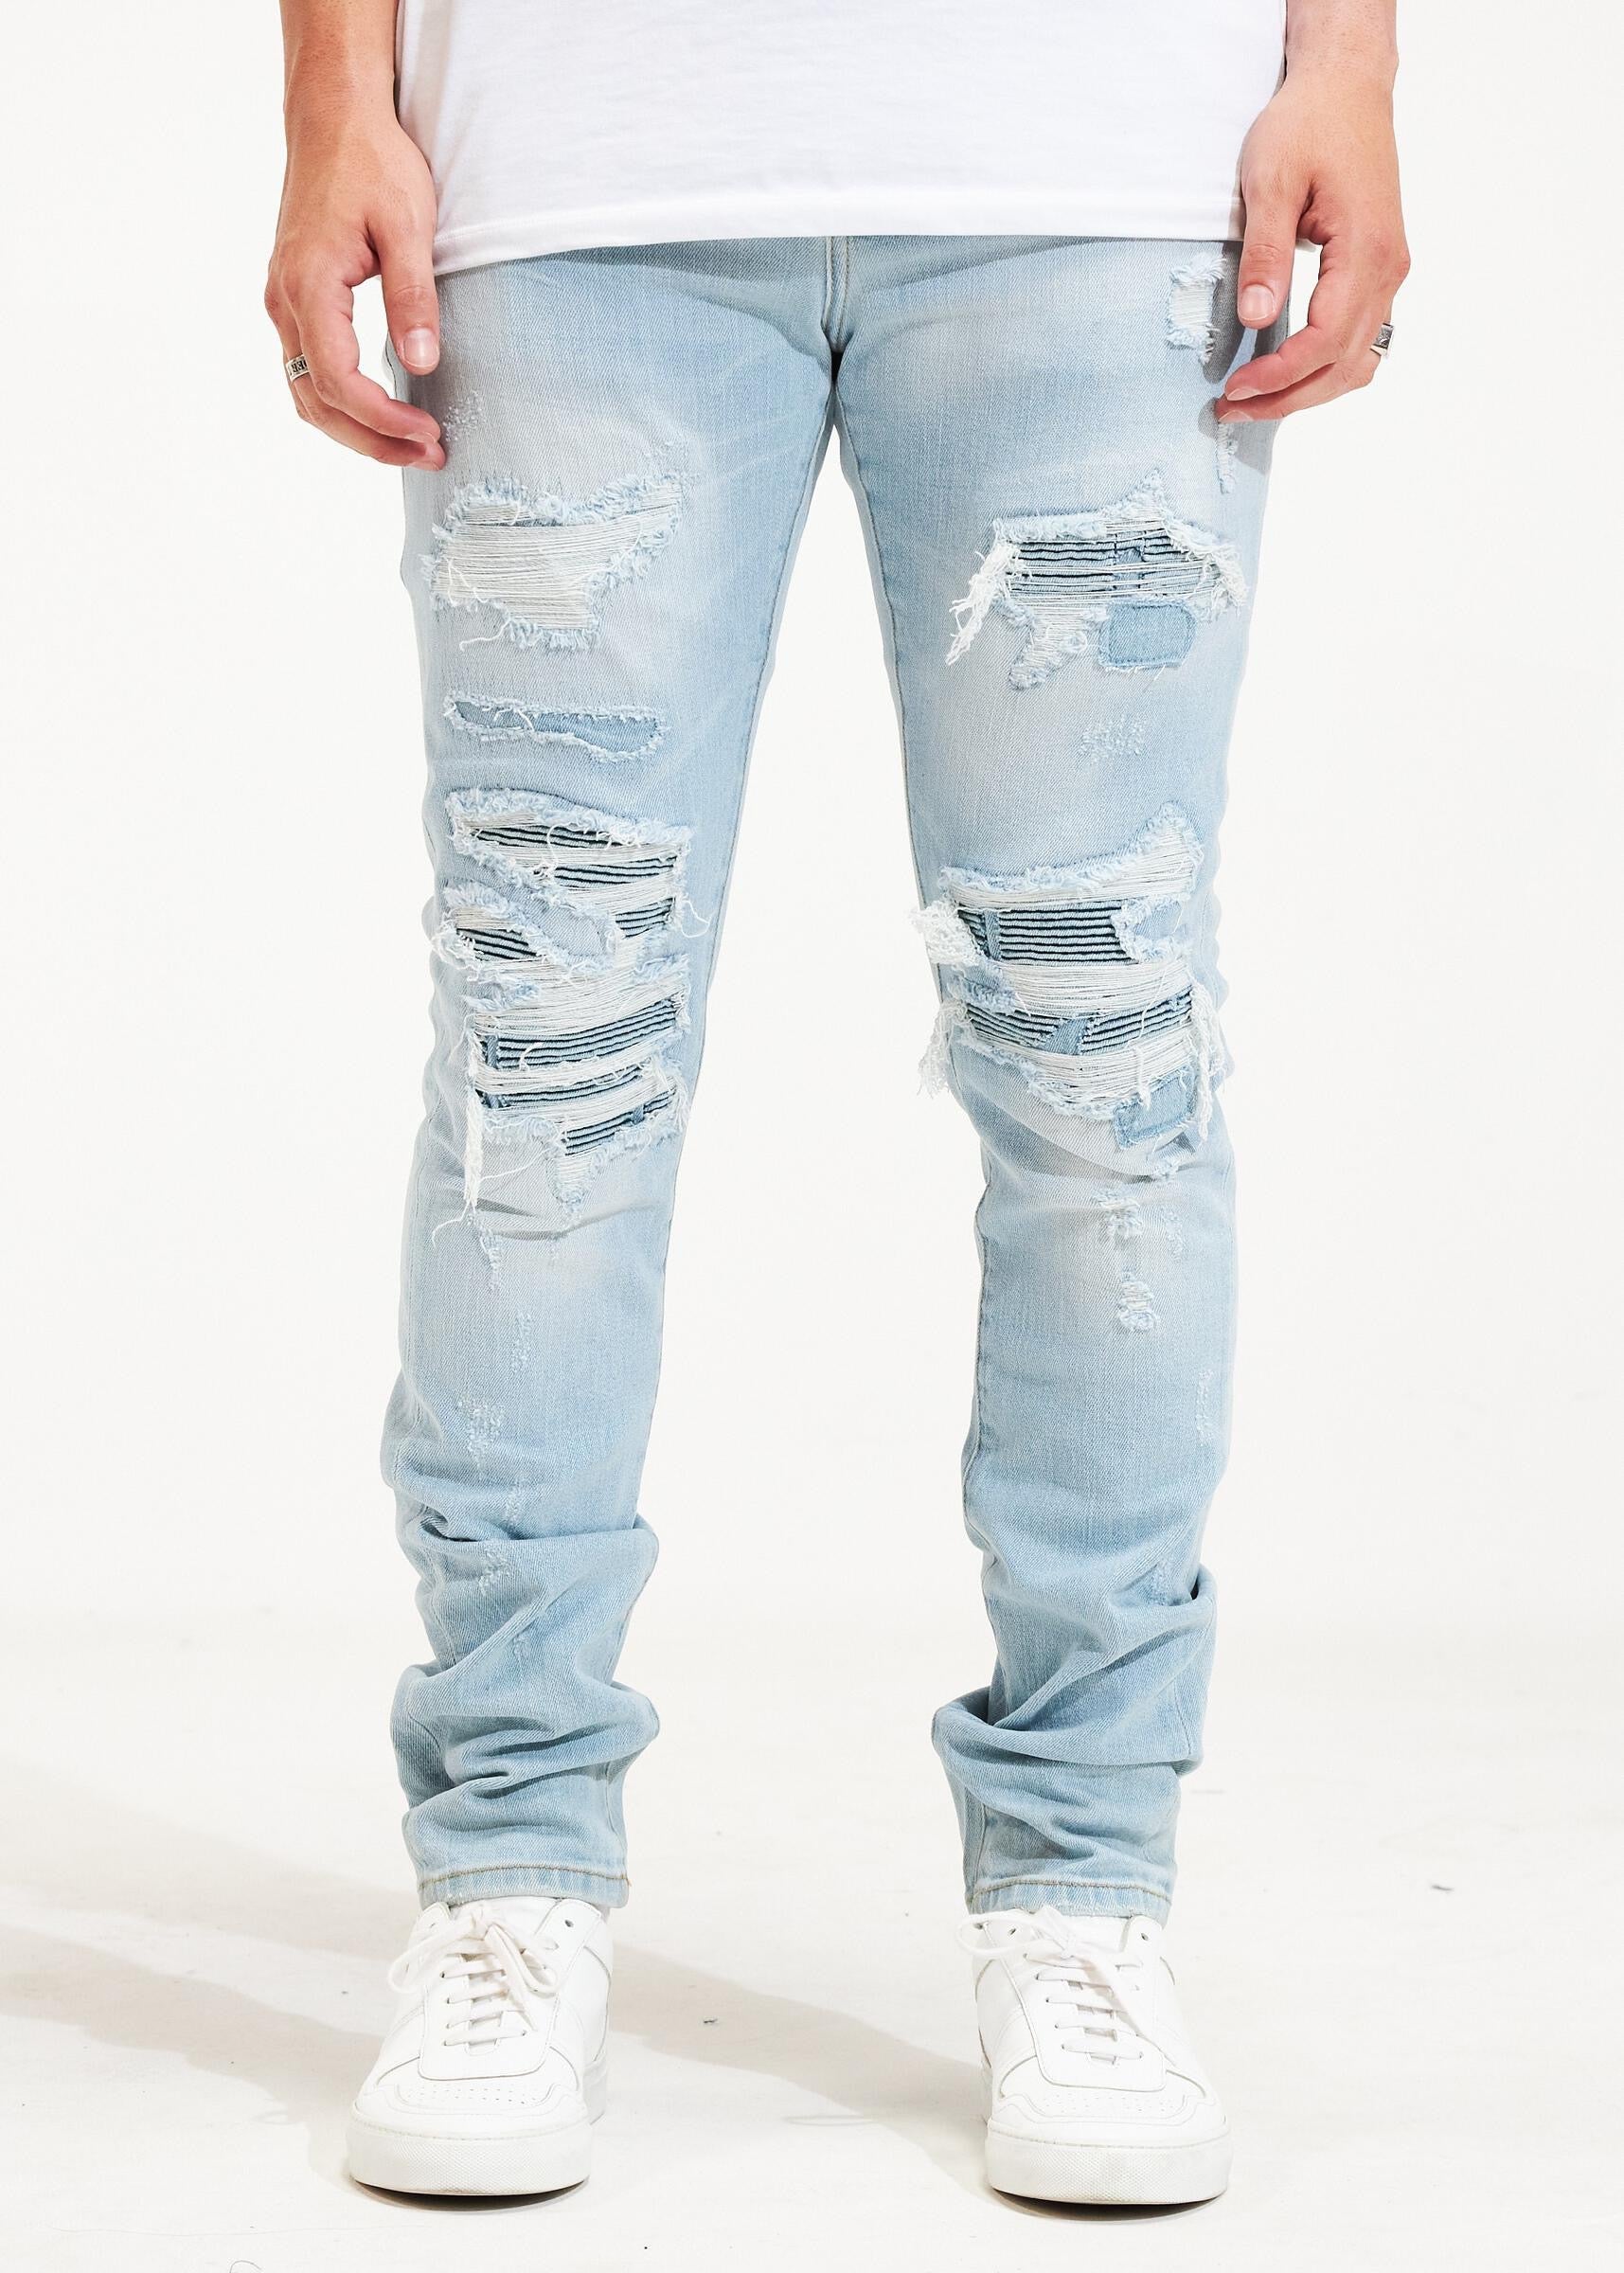 Consequent zak explosie Embellish Denim Jeans - Mav Rip & Repair – InStyle-Tuscaloosa